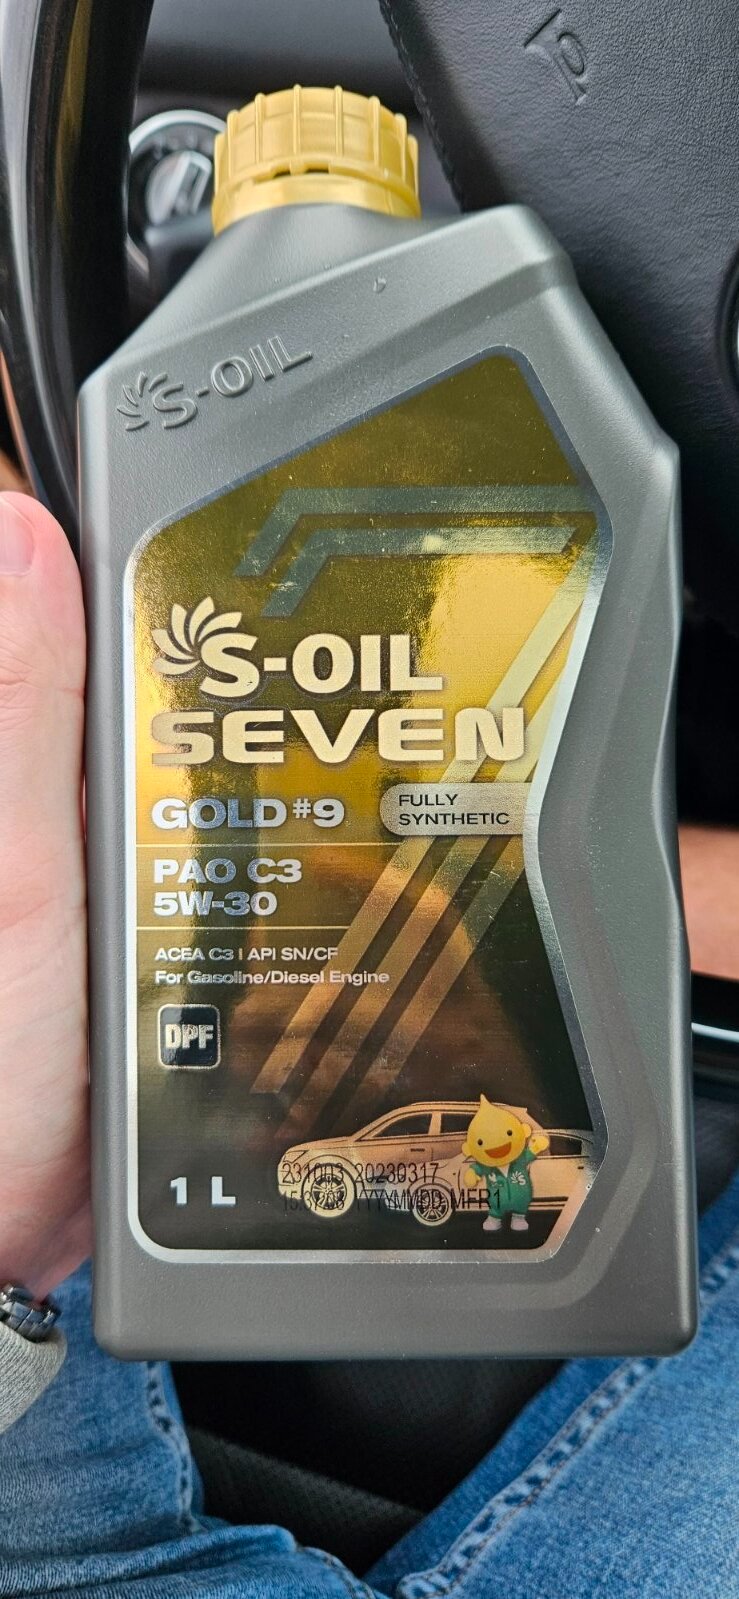 S-Oil 7 Gold #9 PAO C3 5W-30 свежее - Лабораторные анализы - Свежие .